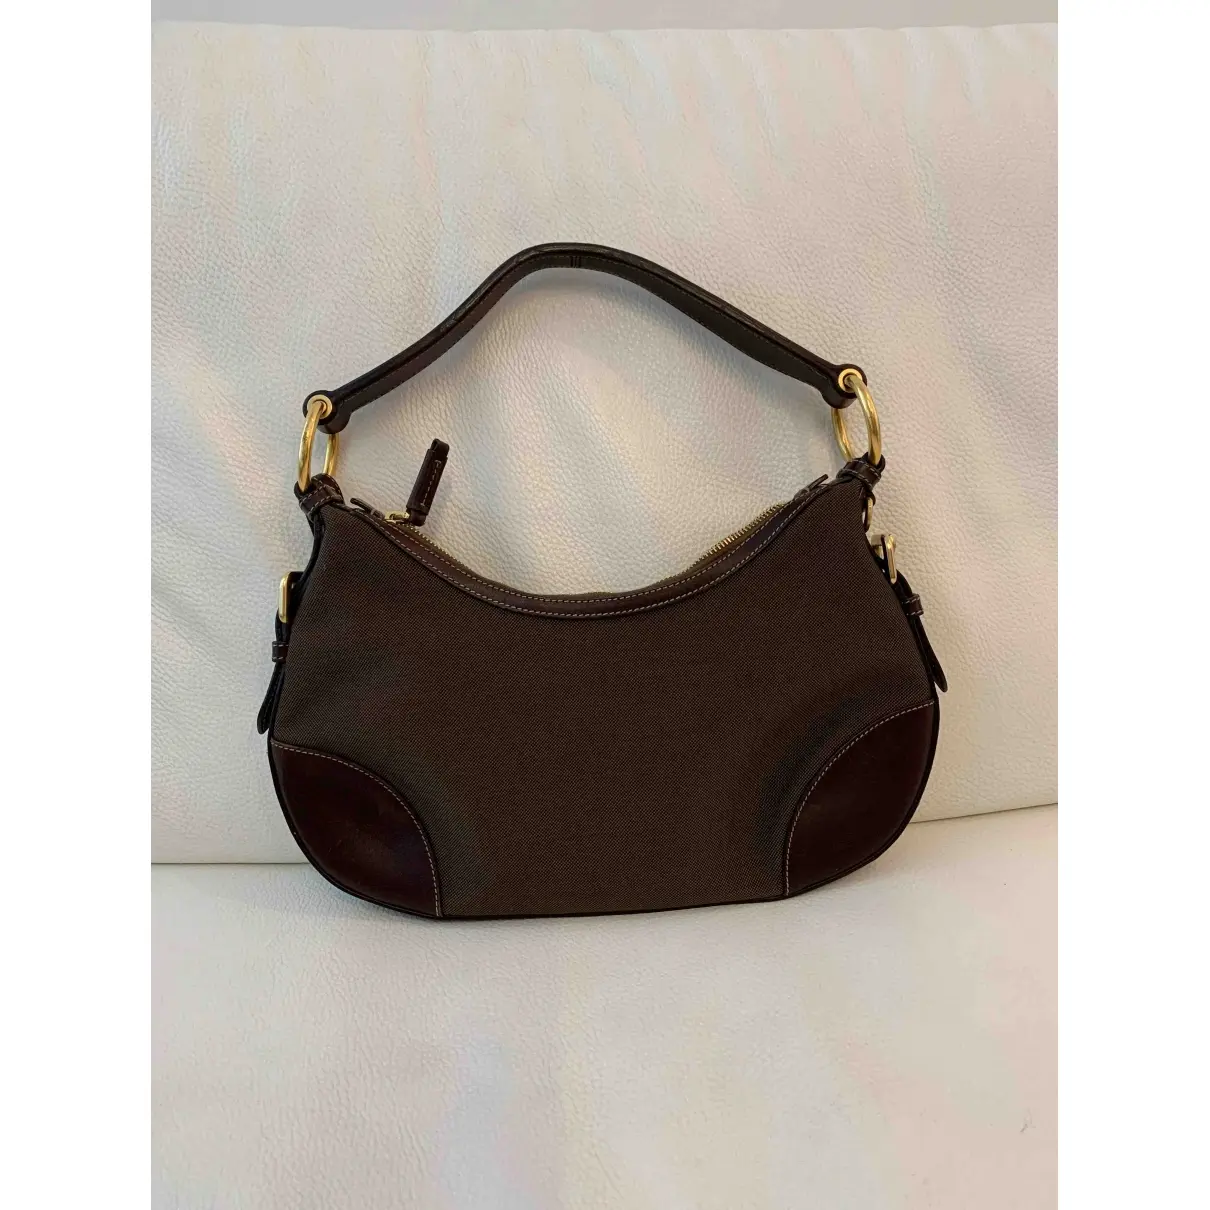 Prada Cloth handbag for sale - Vintage